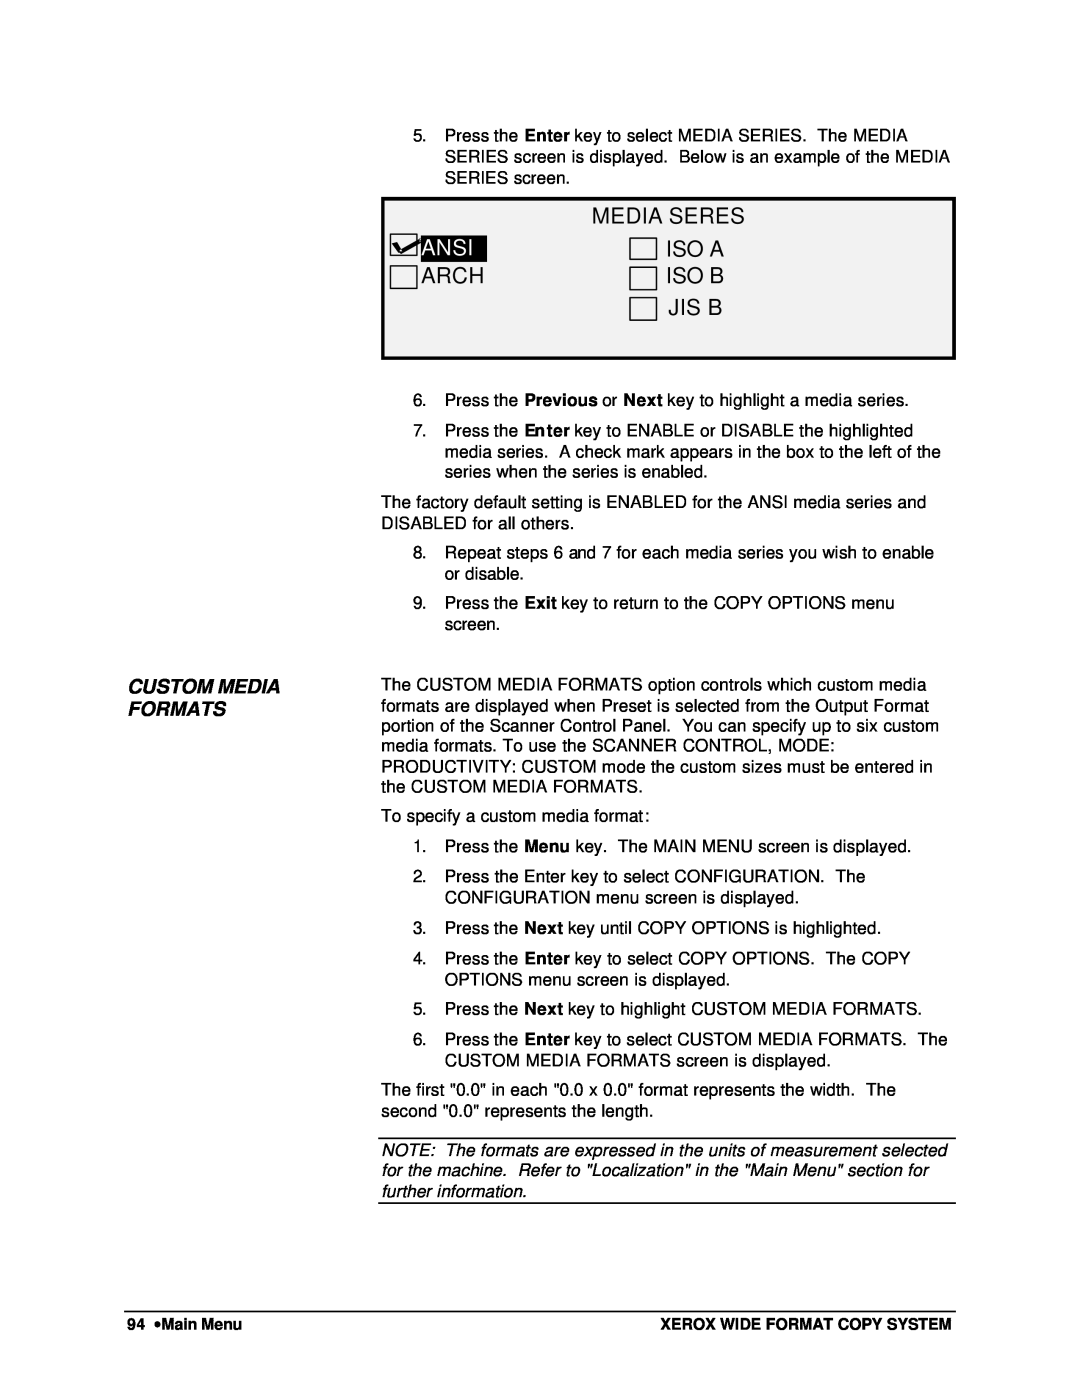 Xerox 8825, 8850, 8830, X2 manual Media Seres, Iso A, Ansi, Arch, Iso B, Jis B, Custom Media Formats 